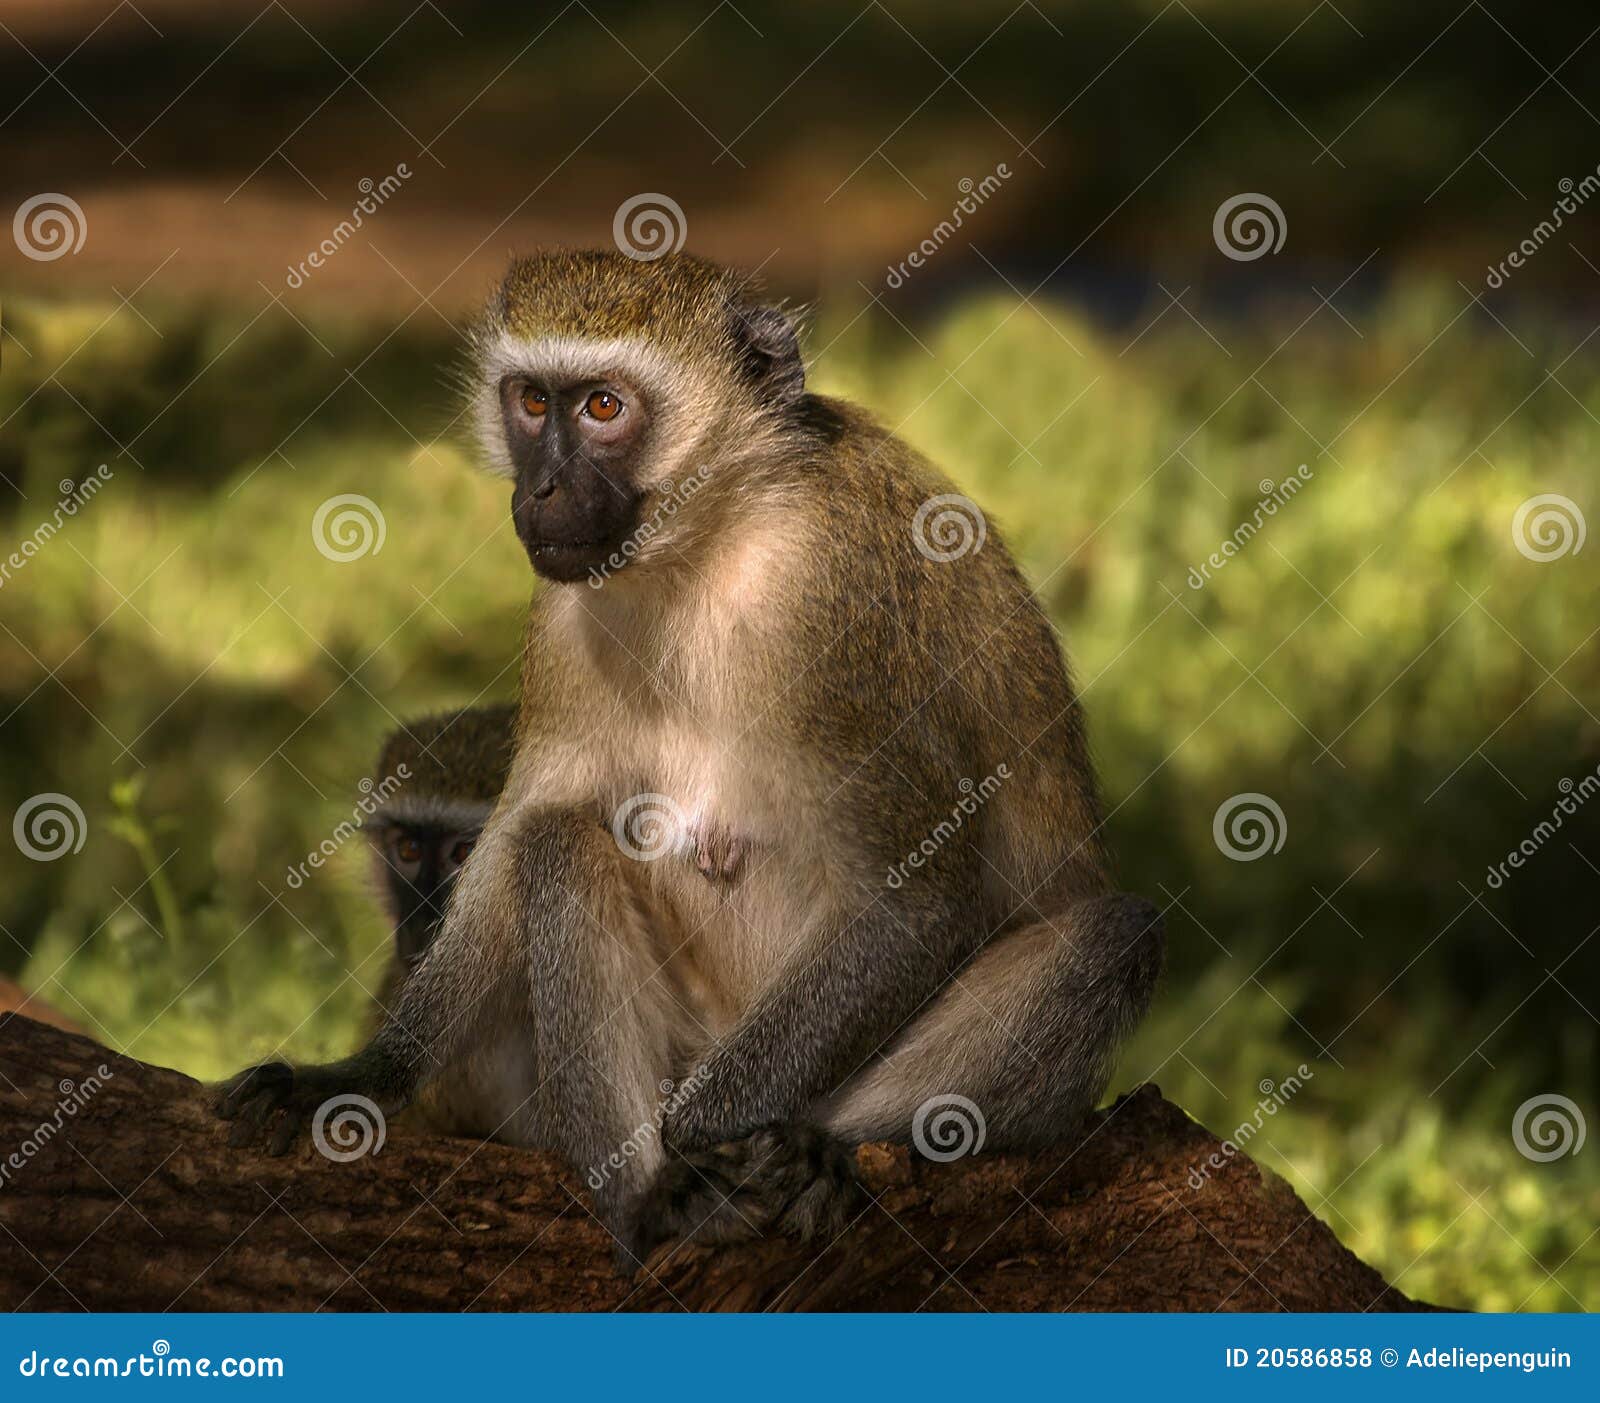 vervet monkey, africa